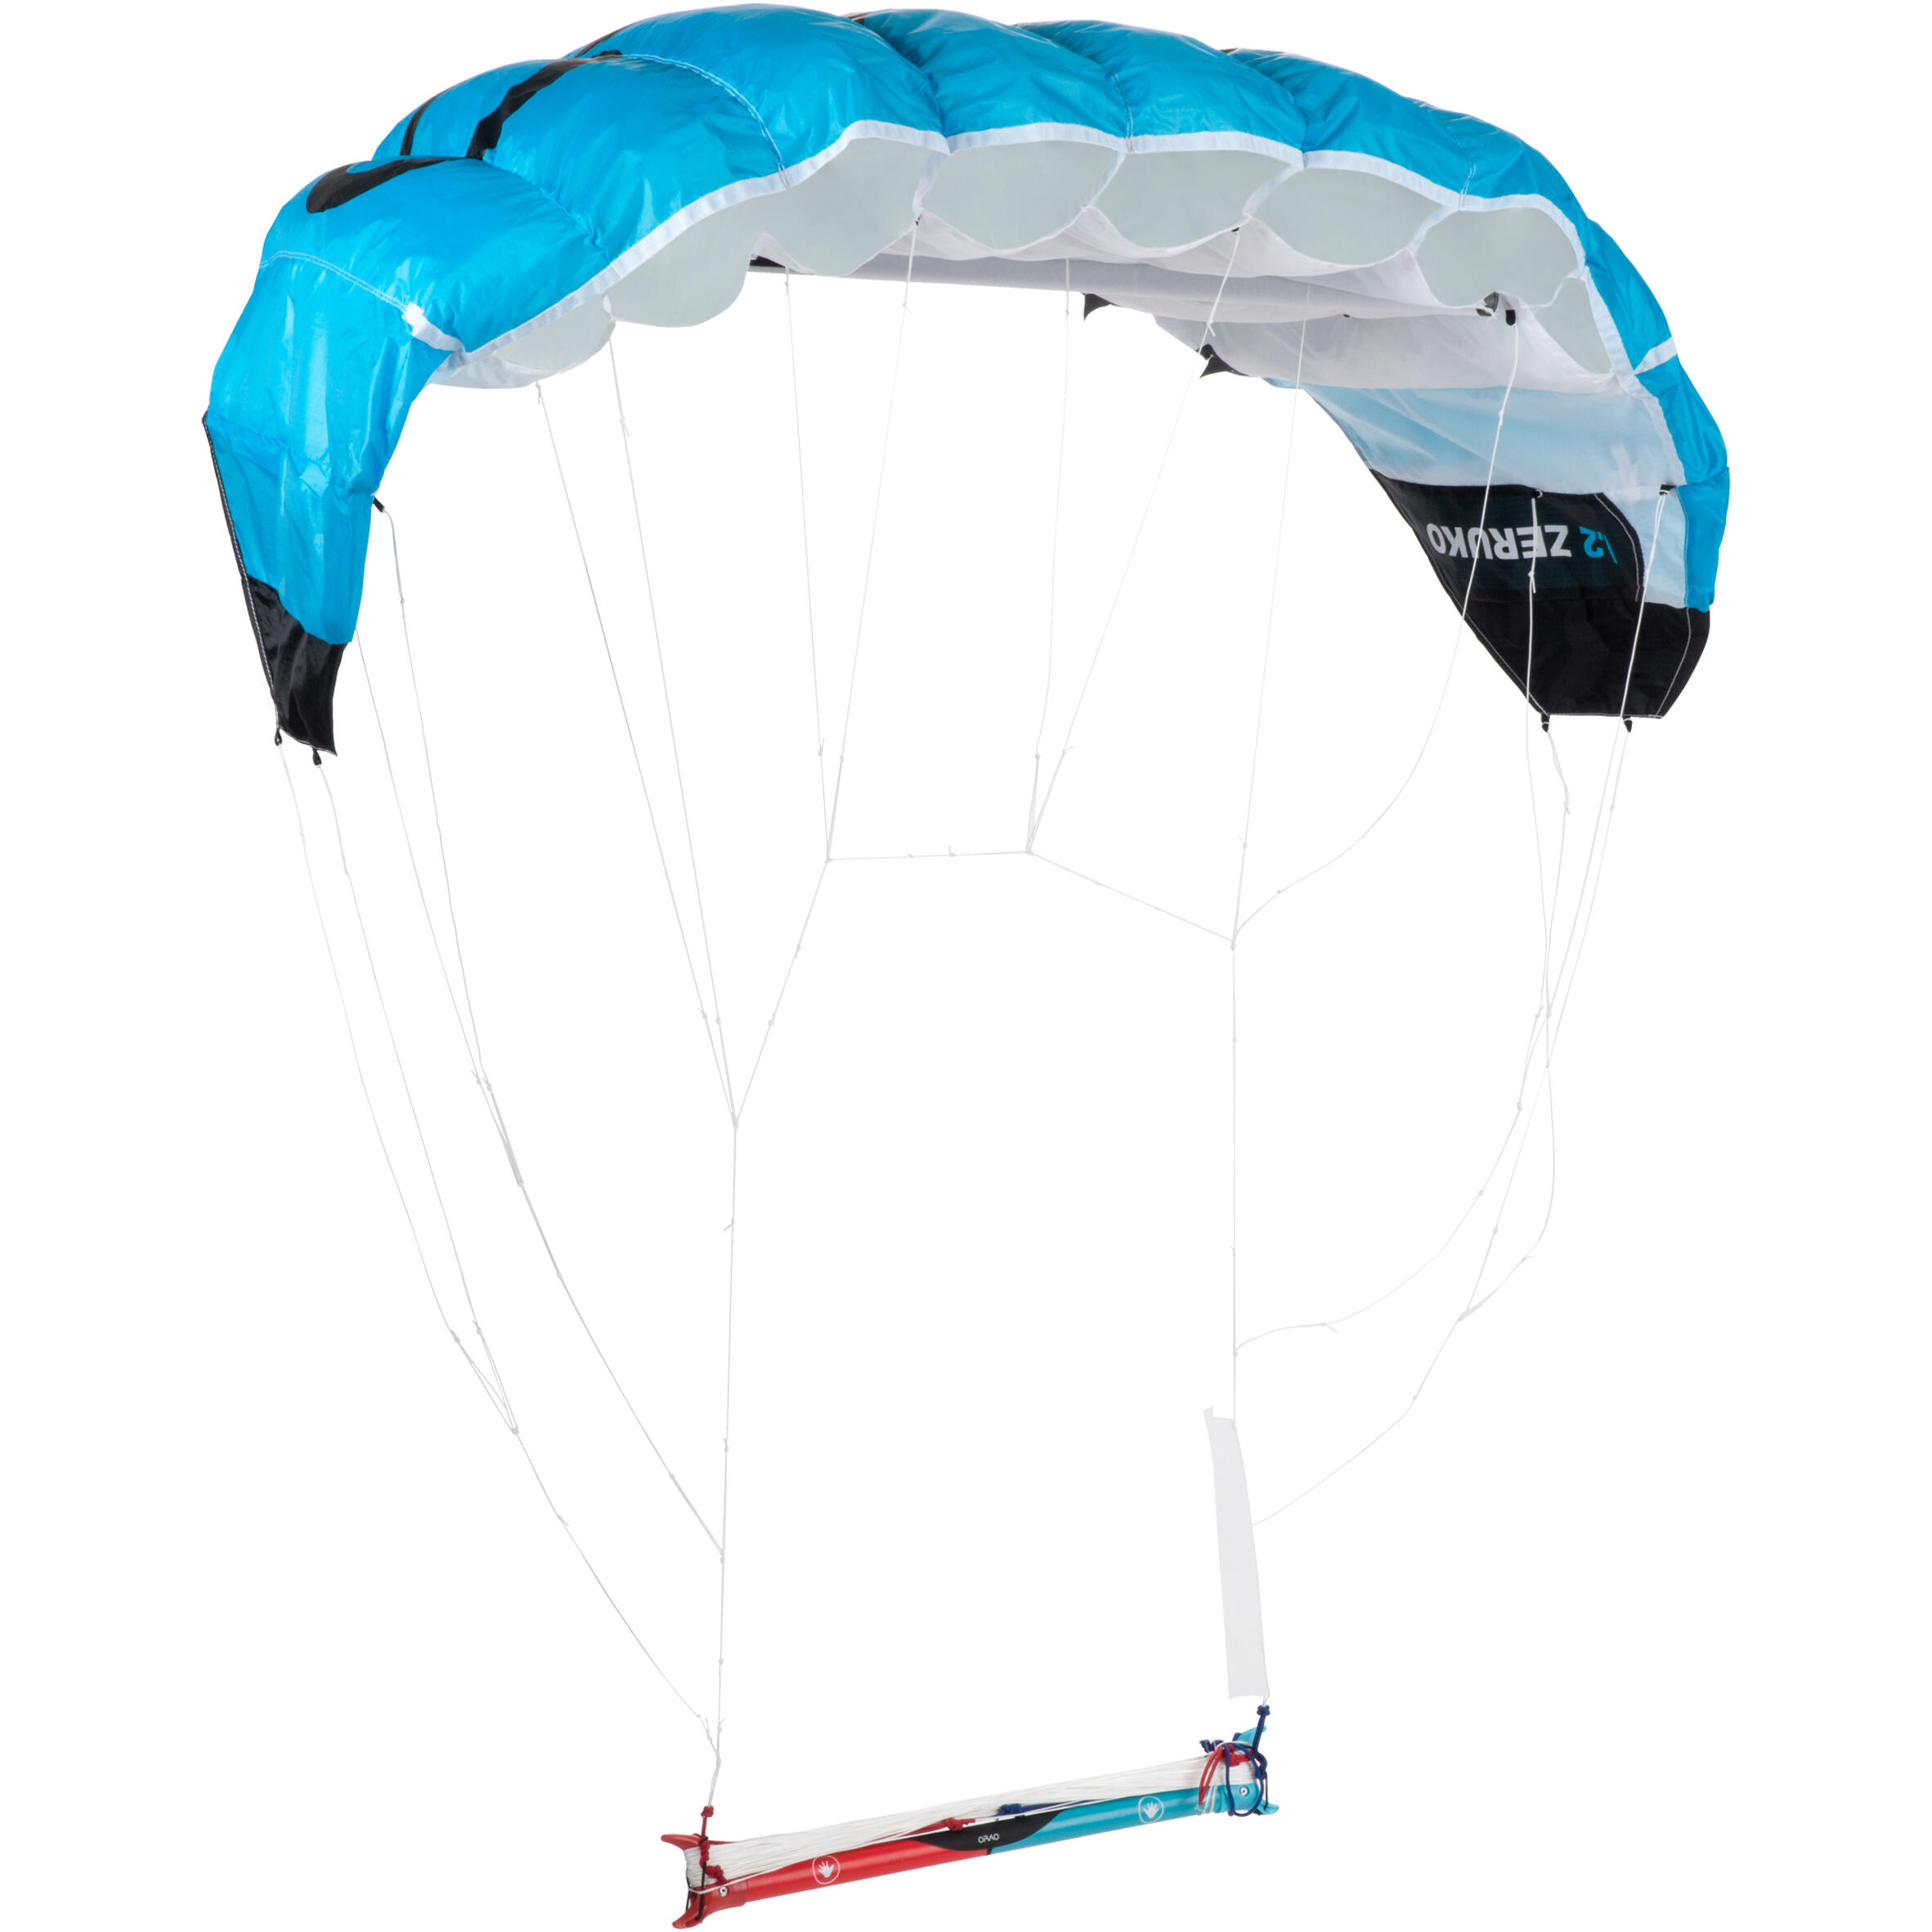 Traction Kite 1.2 m2 + Bar - Blue ORAO 